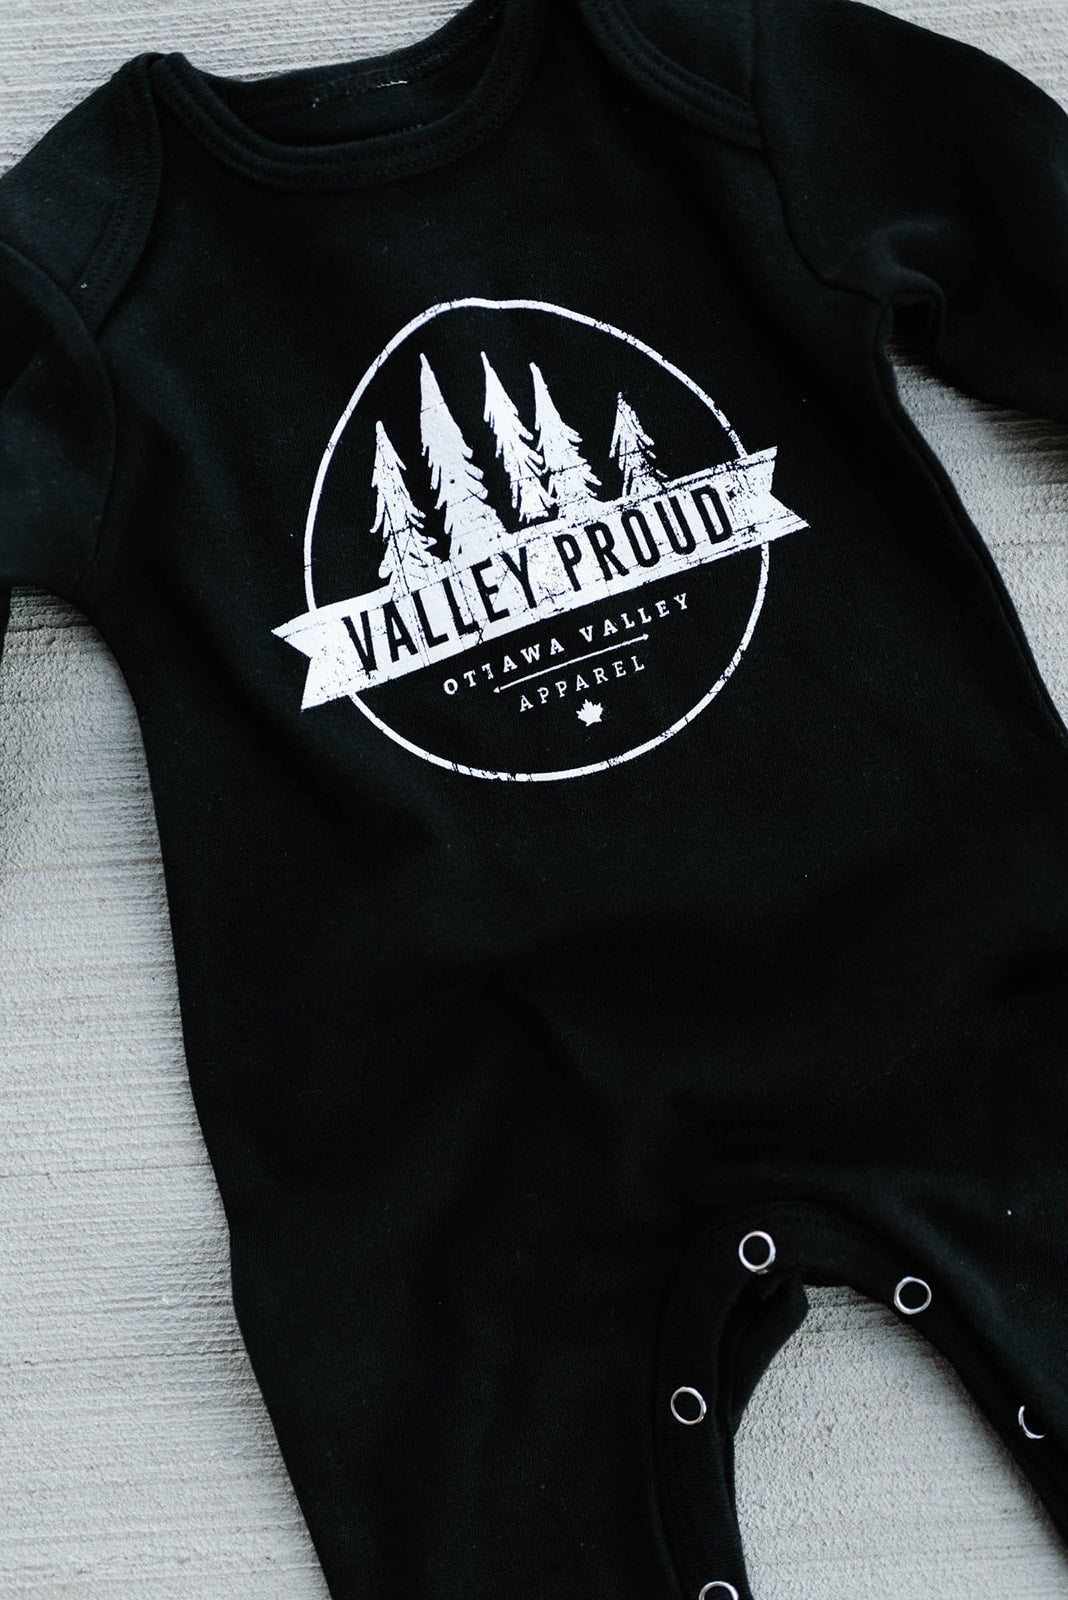 Valley Proud Baby Romper - Black